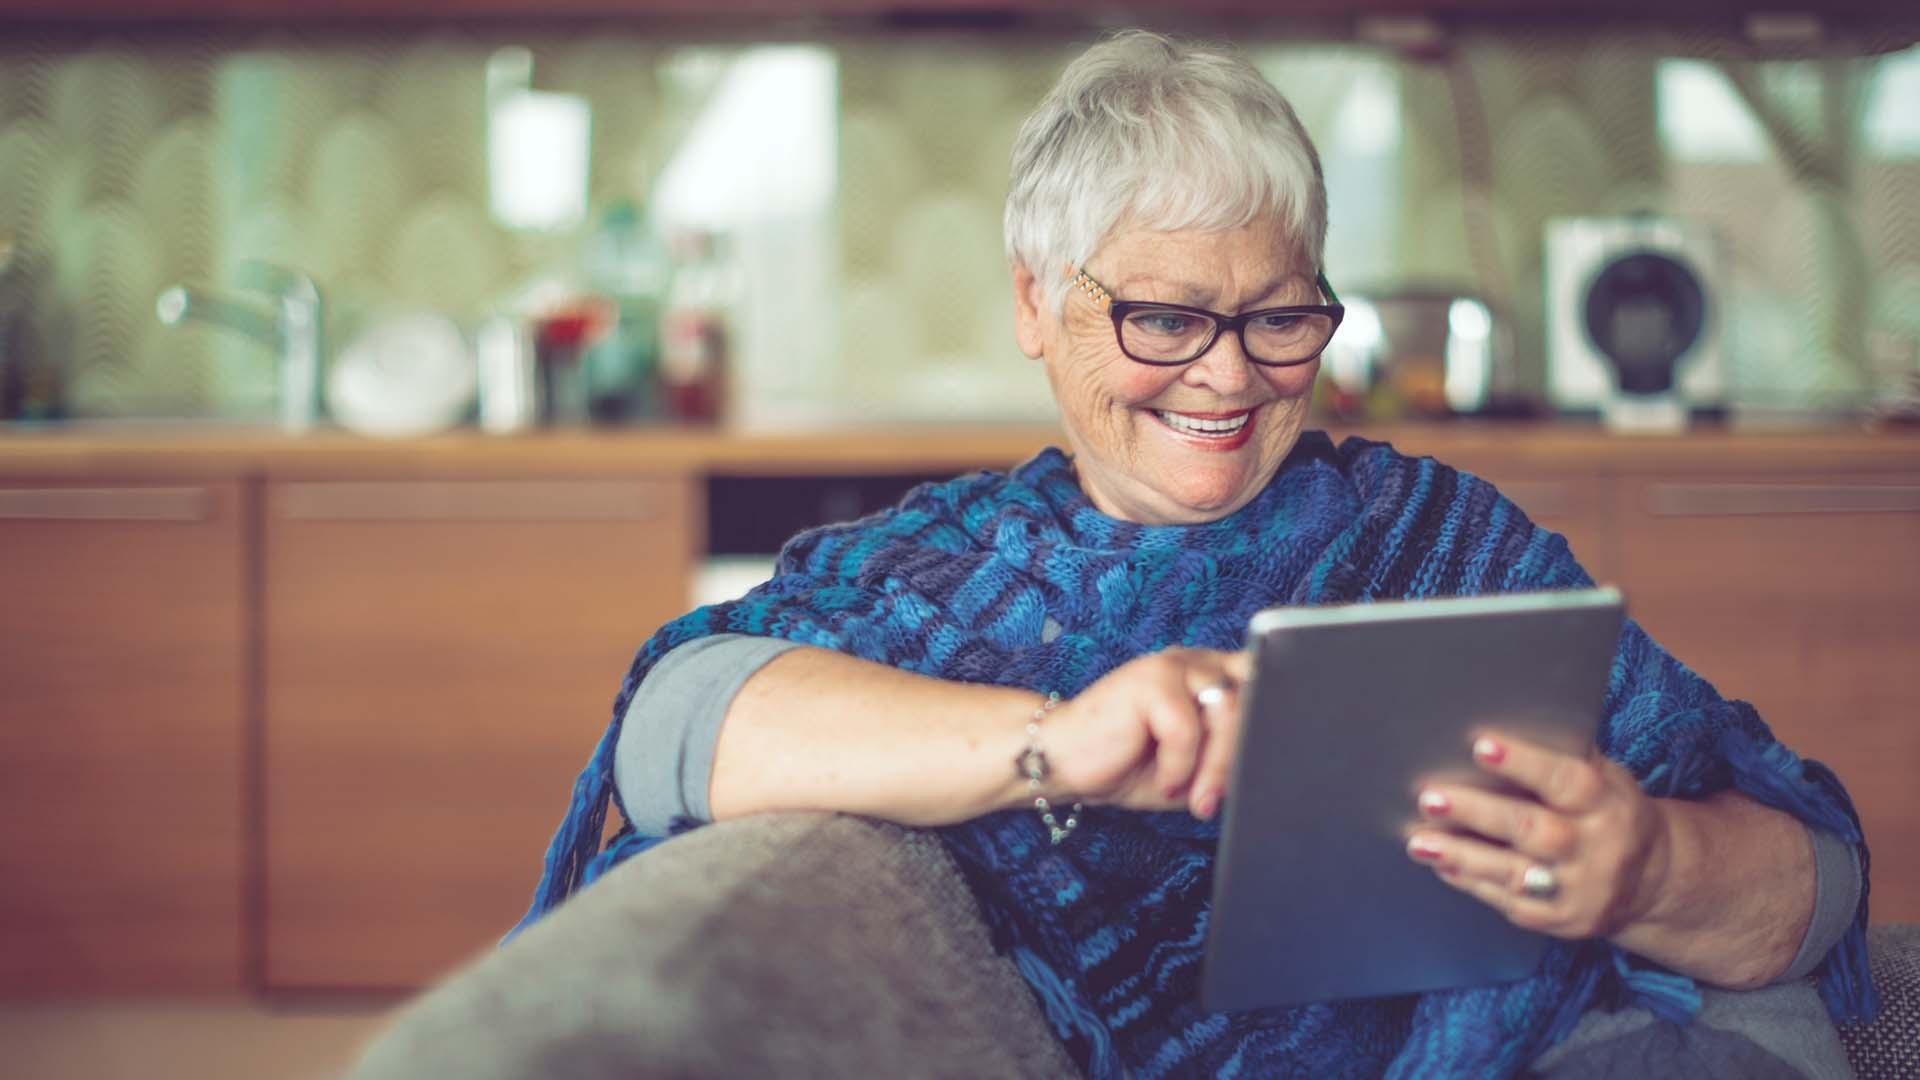 Elderly woman smiling looking at tablet